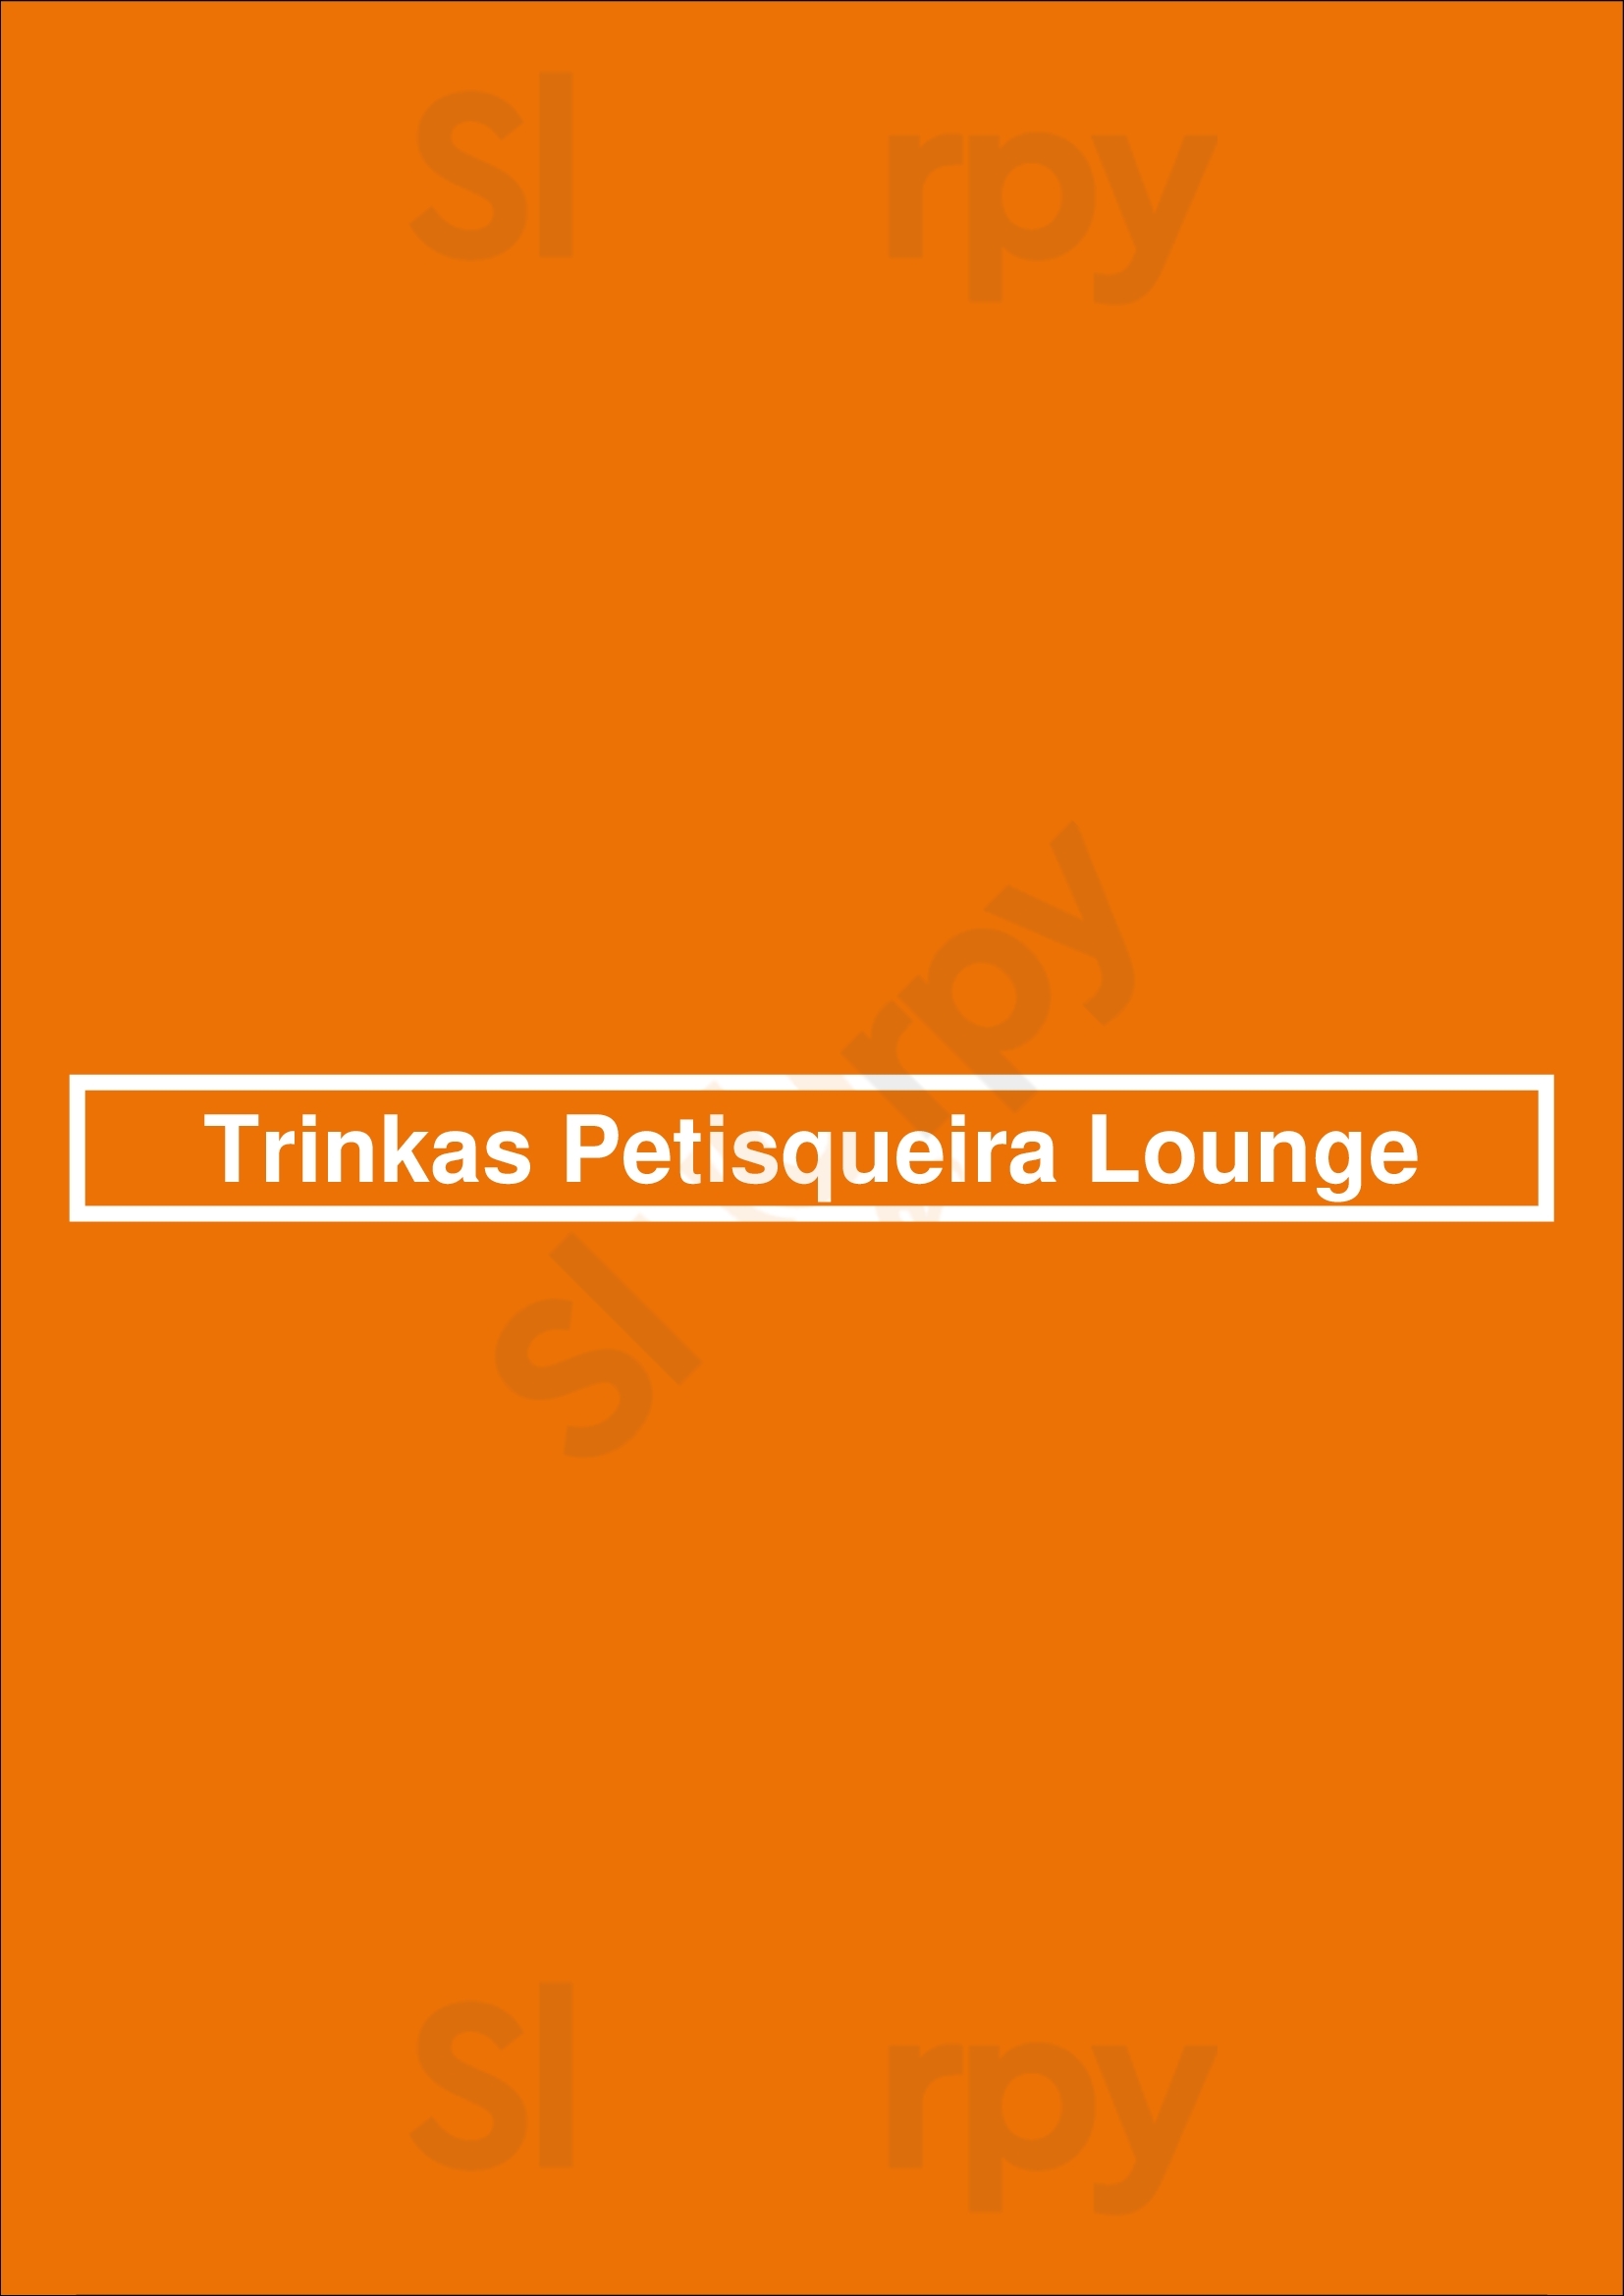 Trinkas Petisqueira Lounge Porto Menu - 1